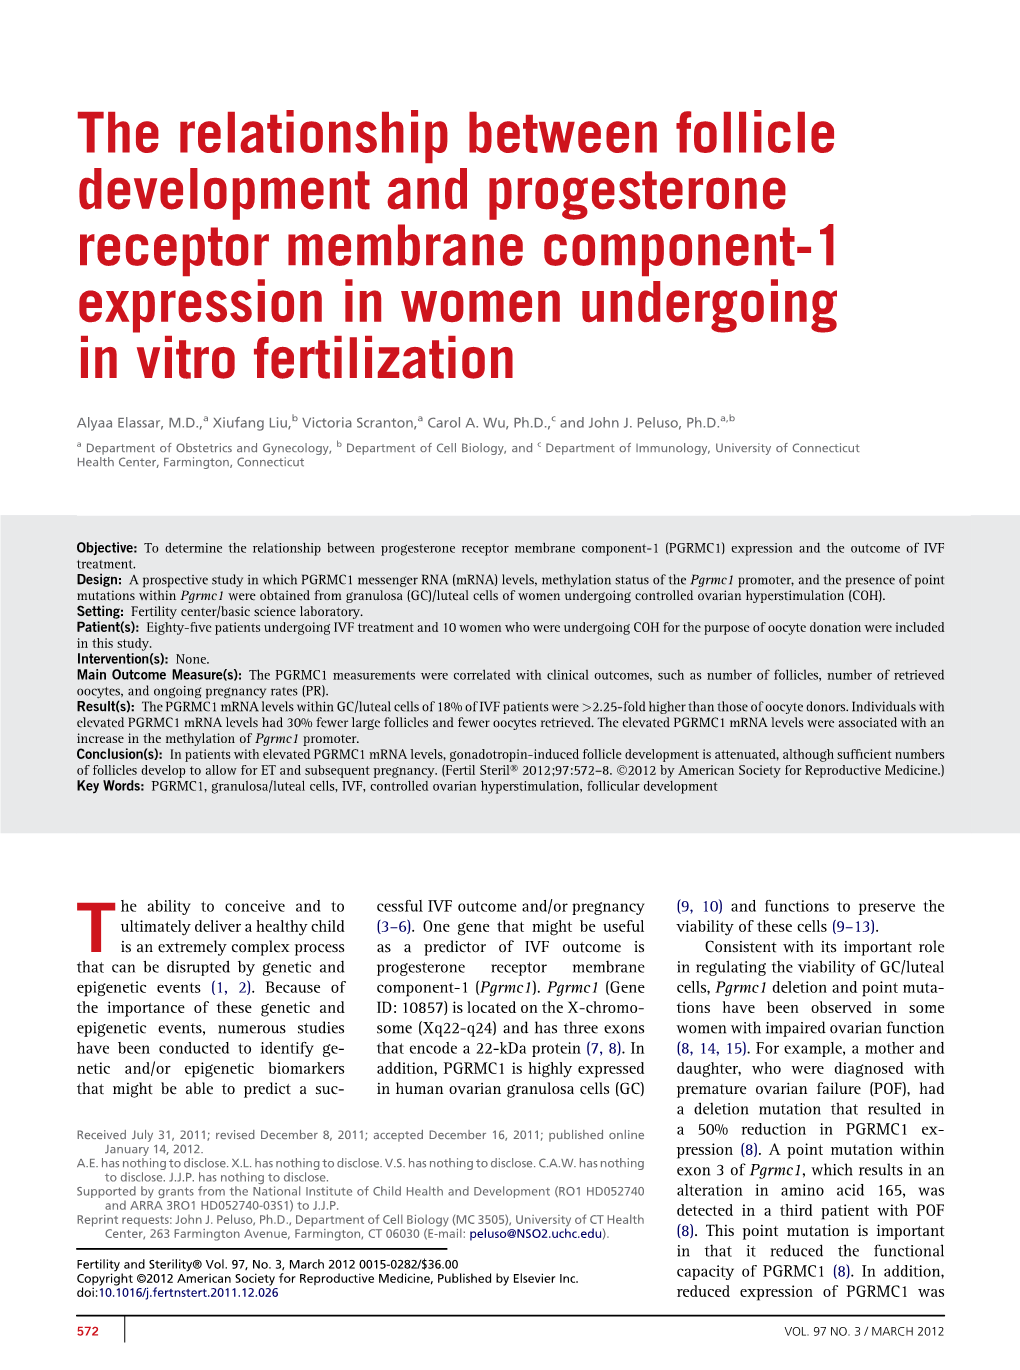 The Relationship Between Follicle Development and Progesterone Receptor Membrane Component-1 Expression in Women Undergoing in Vitro Fertilization